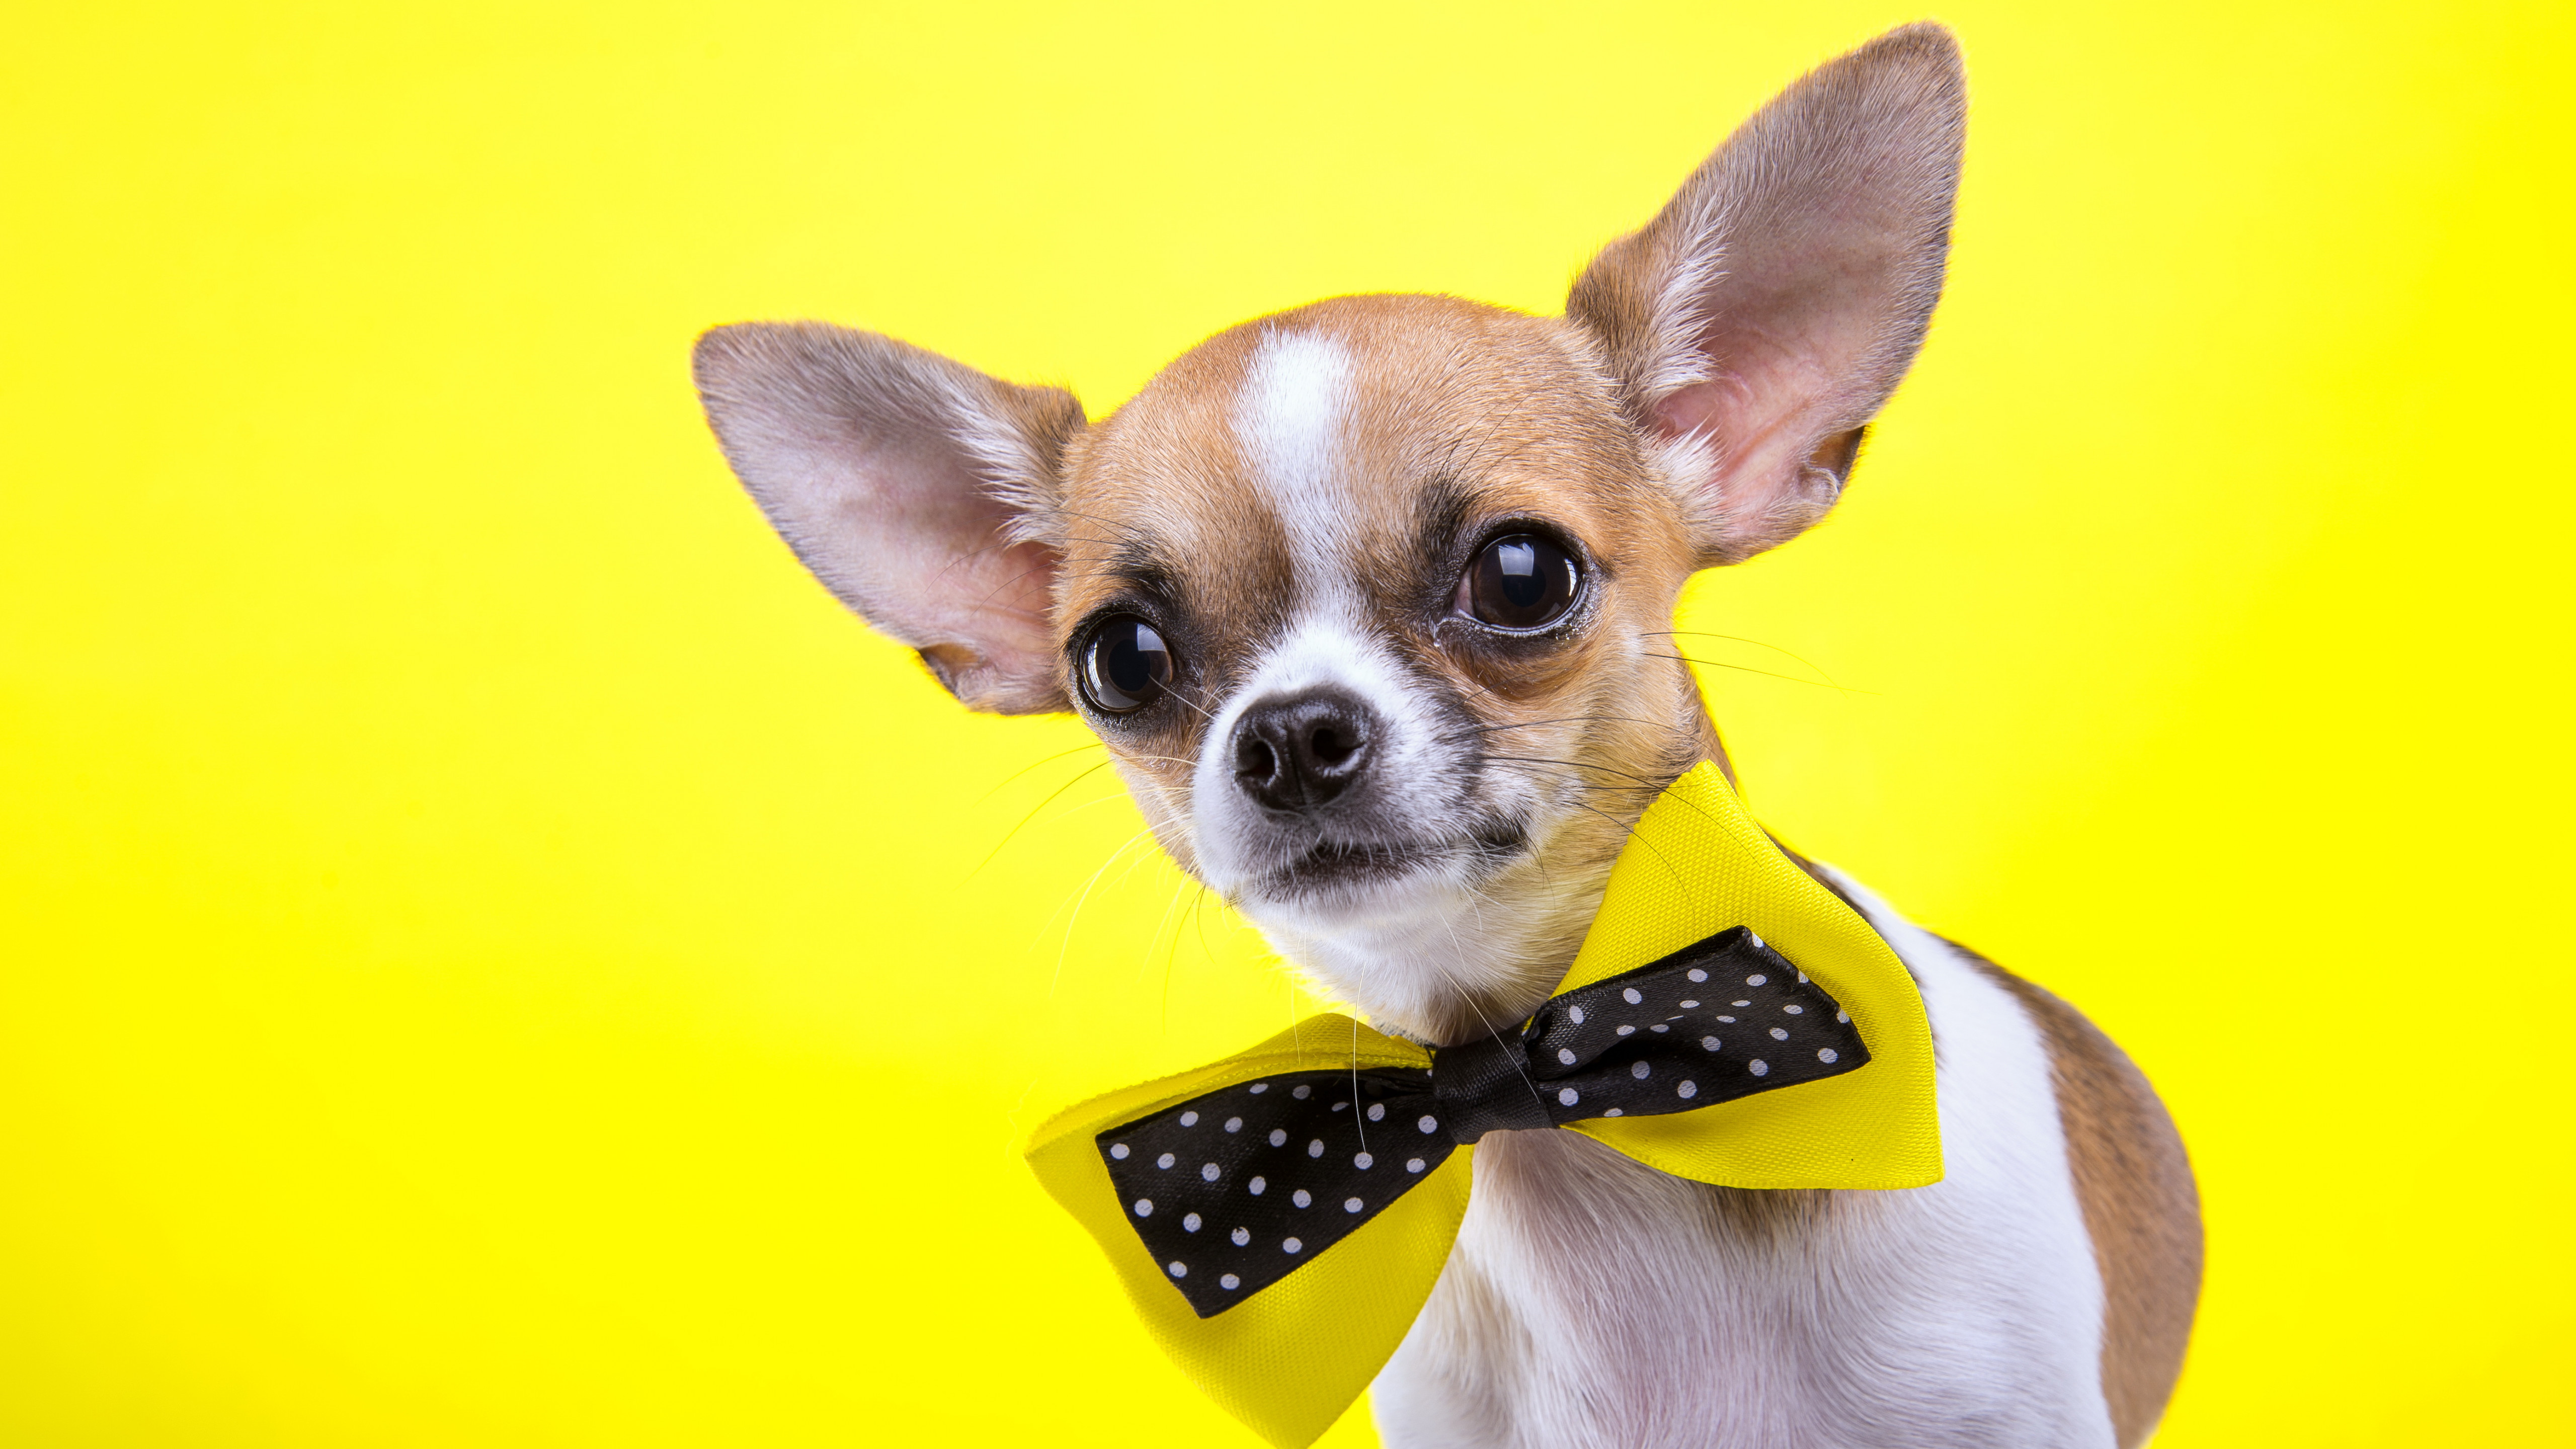 Wallpaper Chihuahua, dog, cute animals, yellow, 5k, Animals #17839